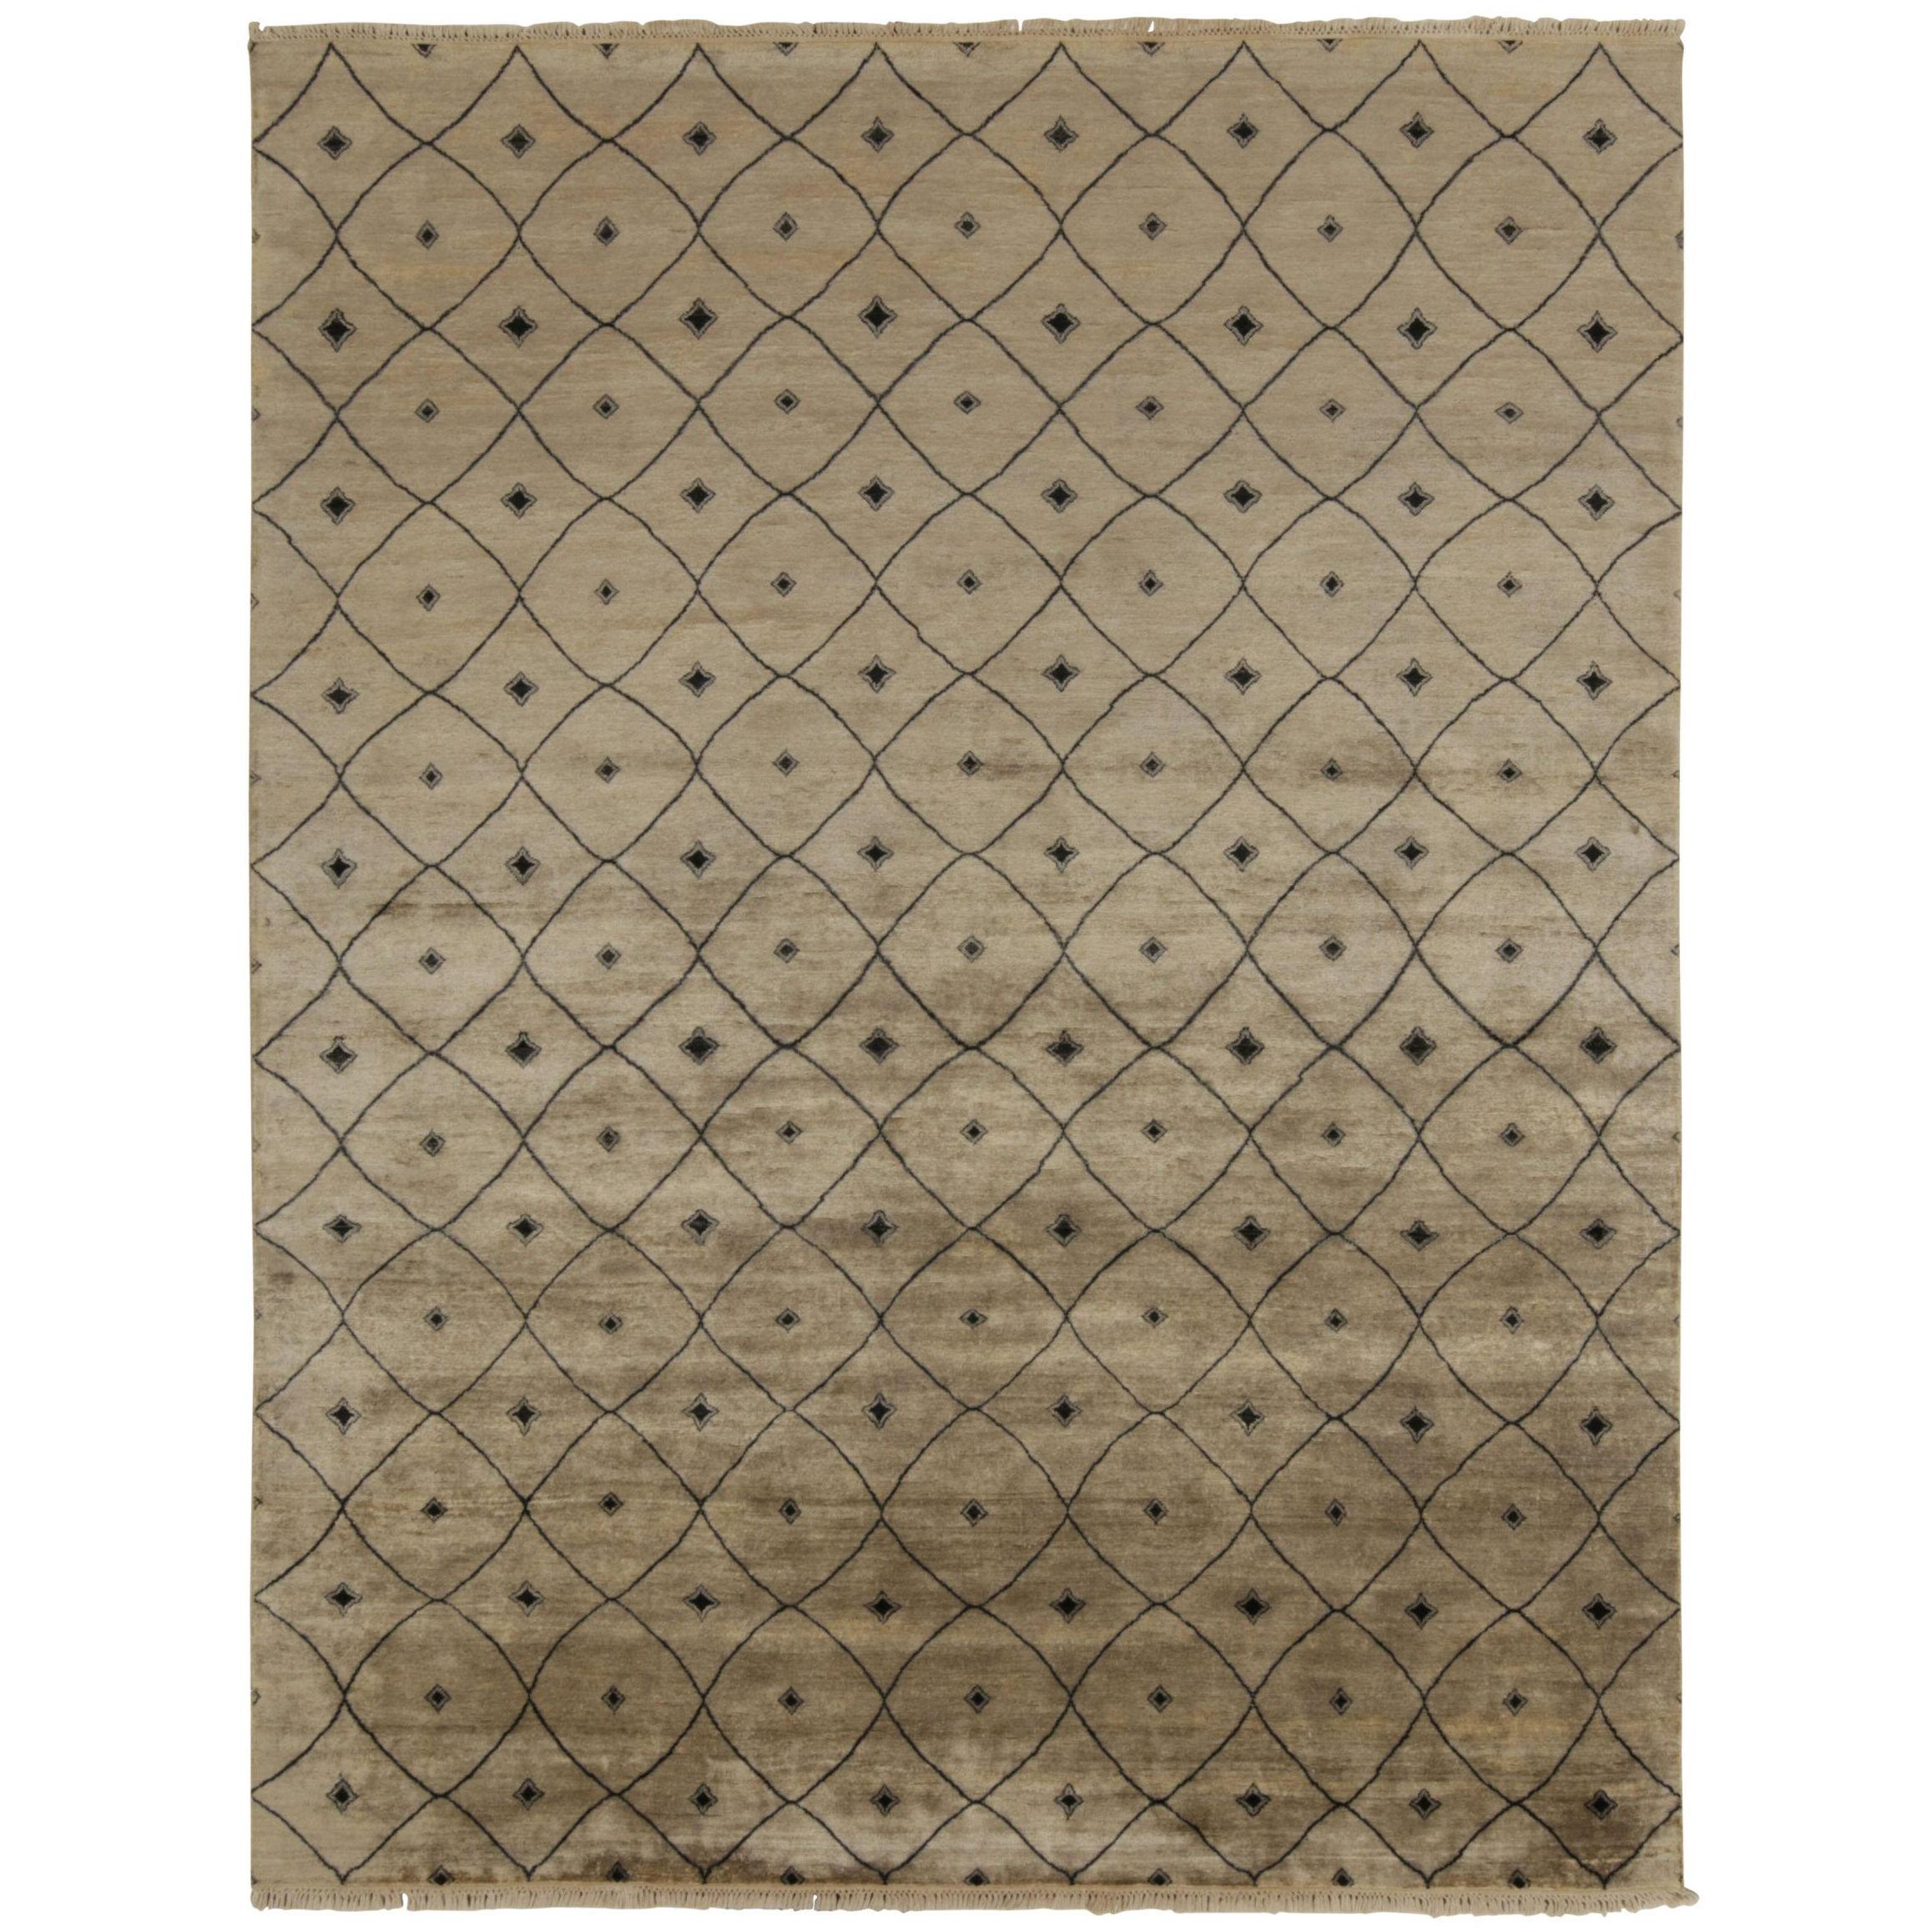 Rug & Kilim’s Moroccan Style Rug in Beige-Brown With Black Trellis Pattern